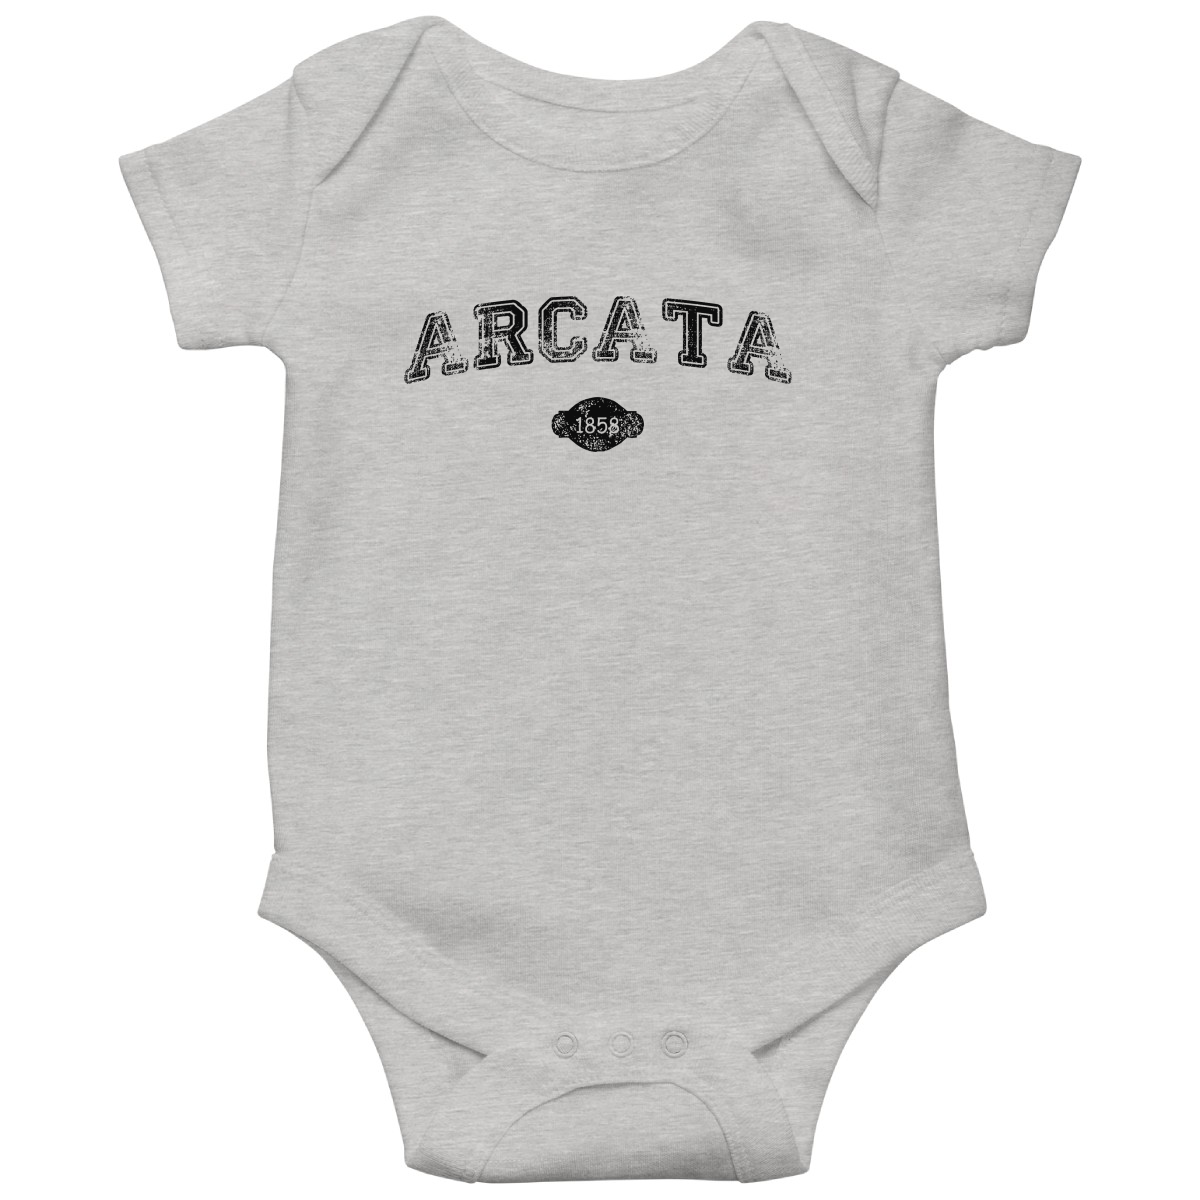 Arcata 1858 Represent Baby Bodysuits | Gray